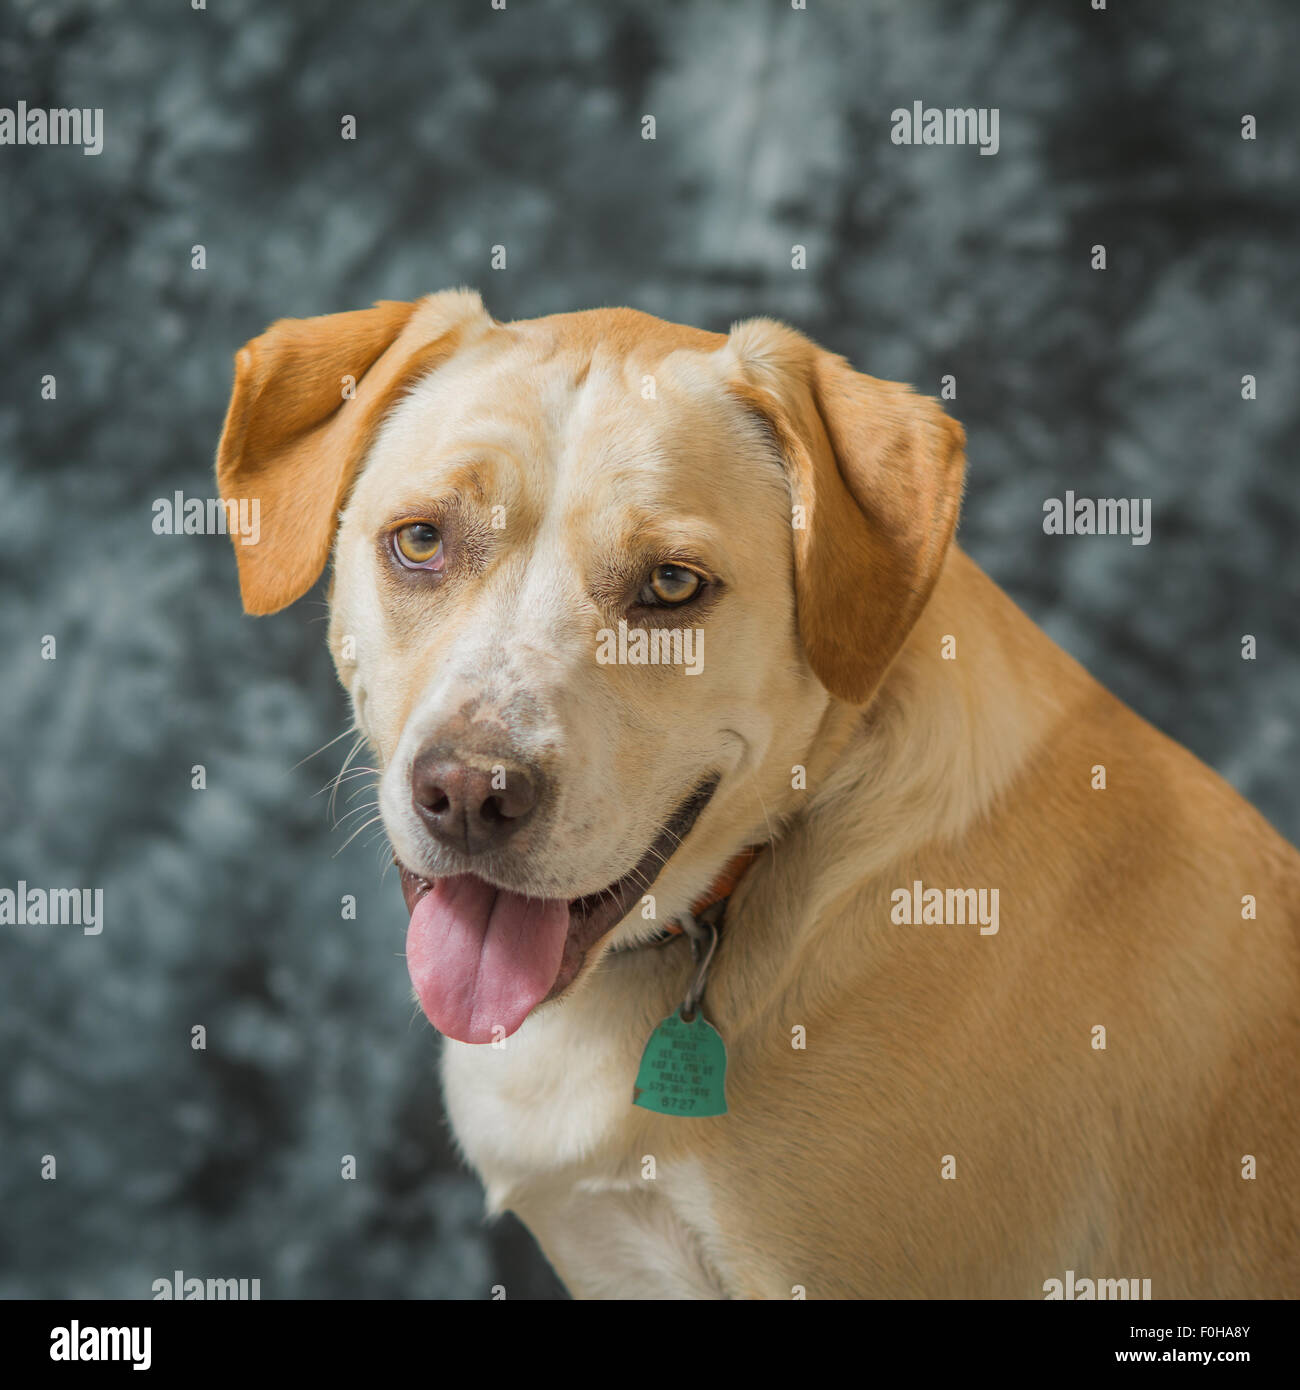 Yellow dog portrait Stock Photo